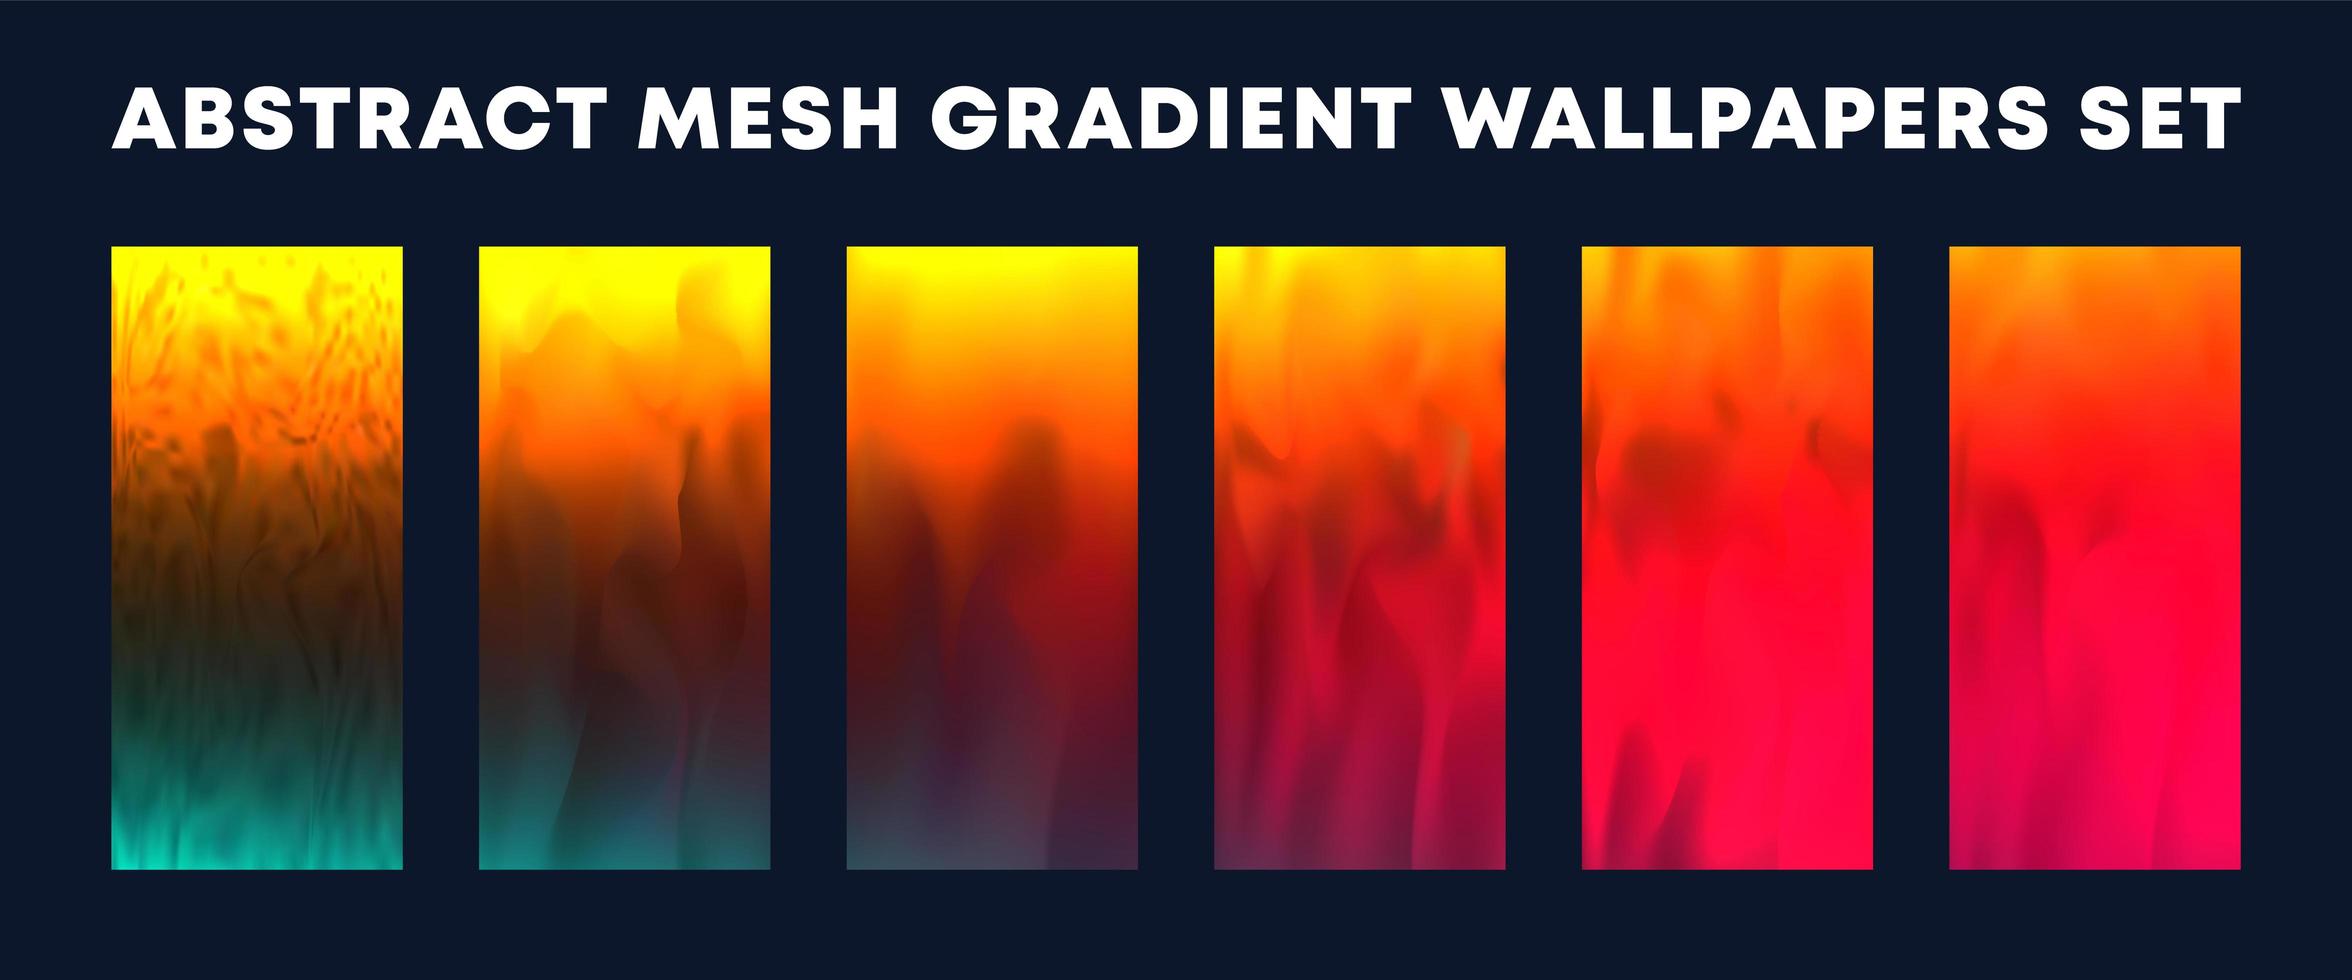 Set of red, yellow, green mesh gradient wallpapers vector